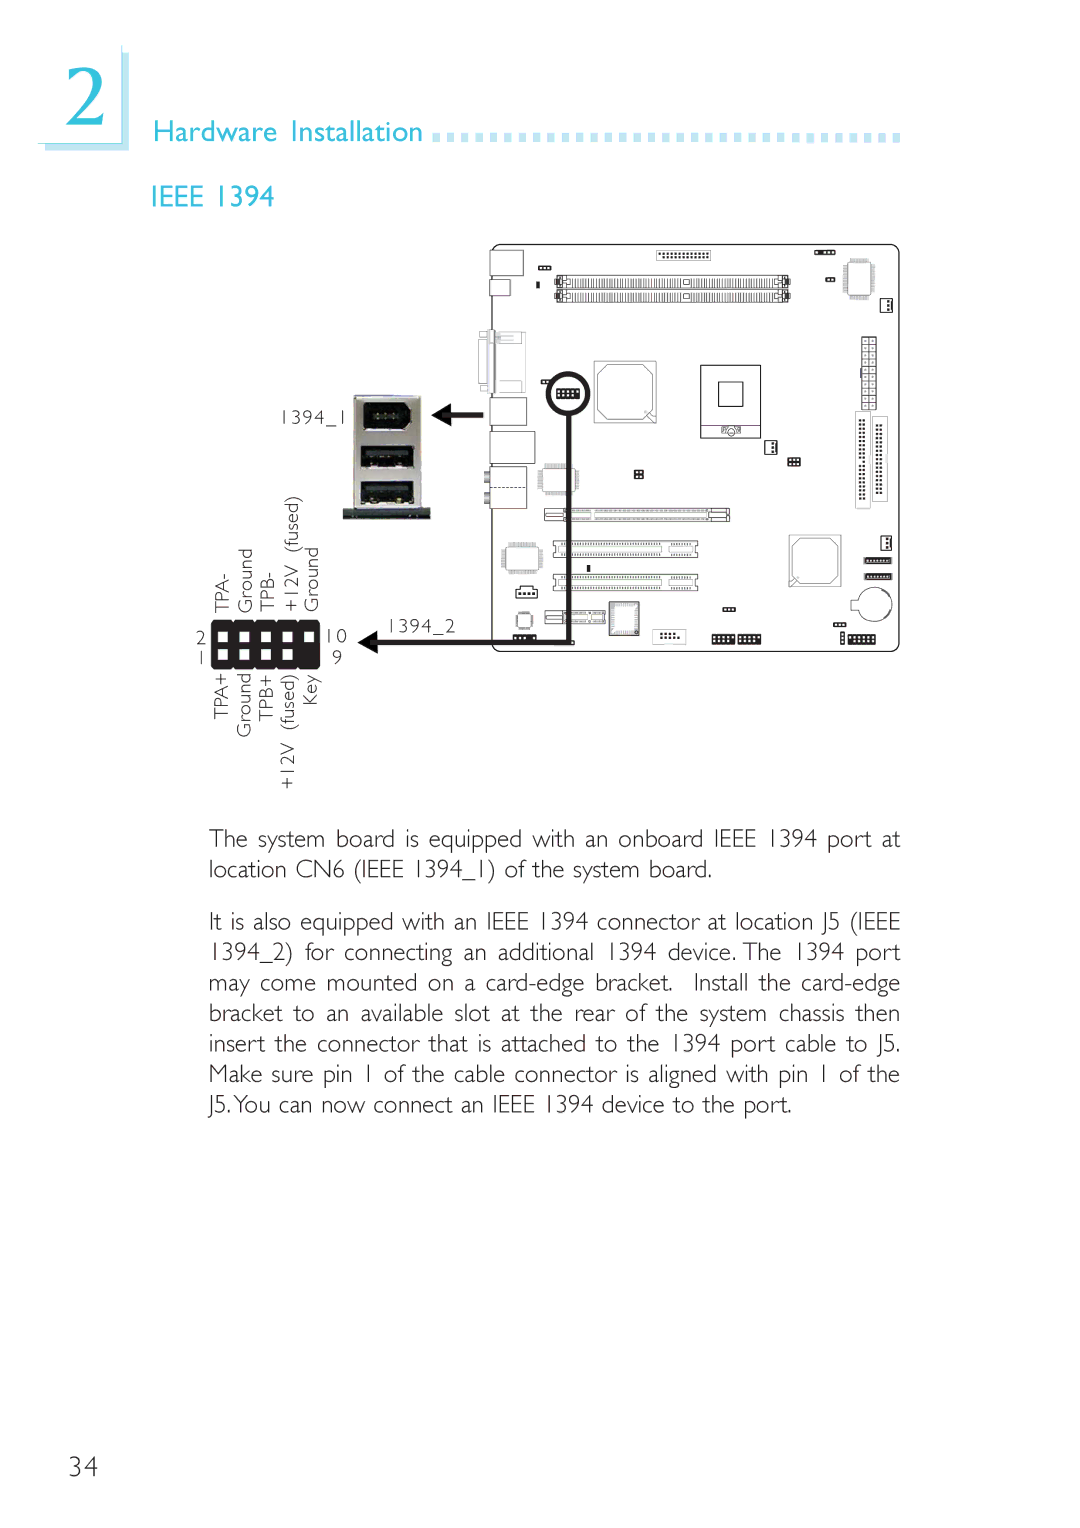 DFI 915GM-MIGF user manual Hardware Installation Ieee 